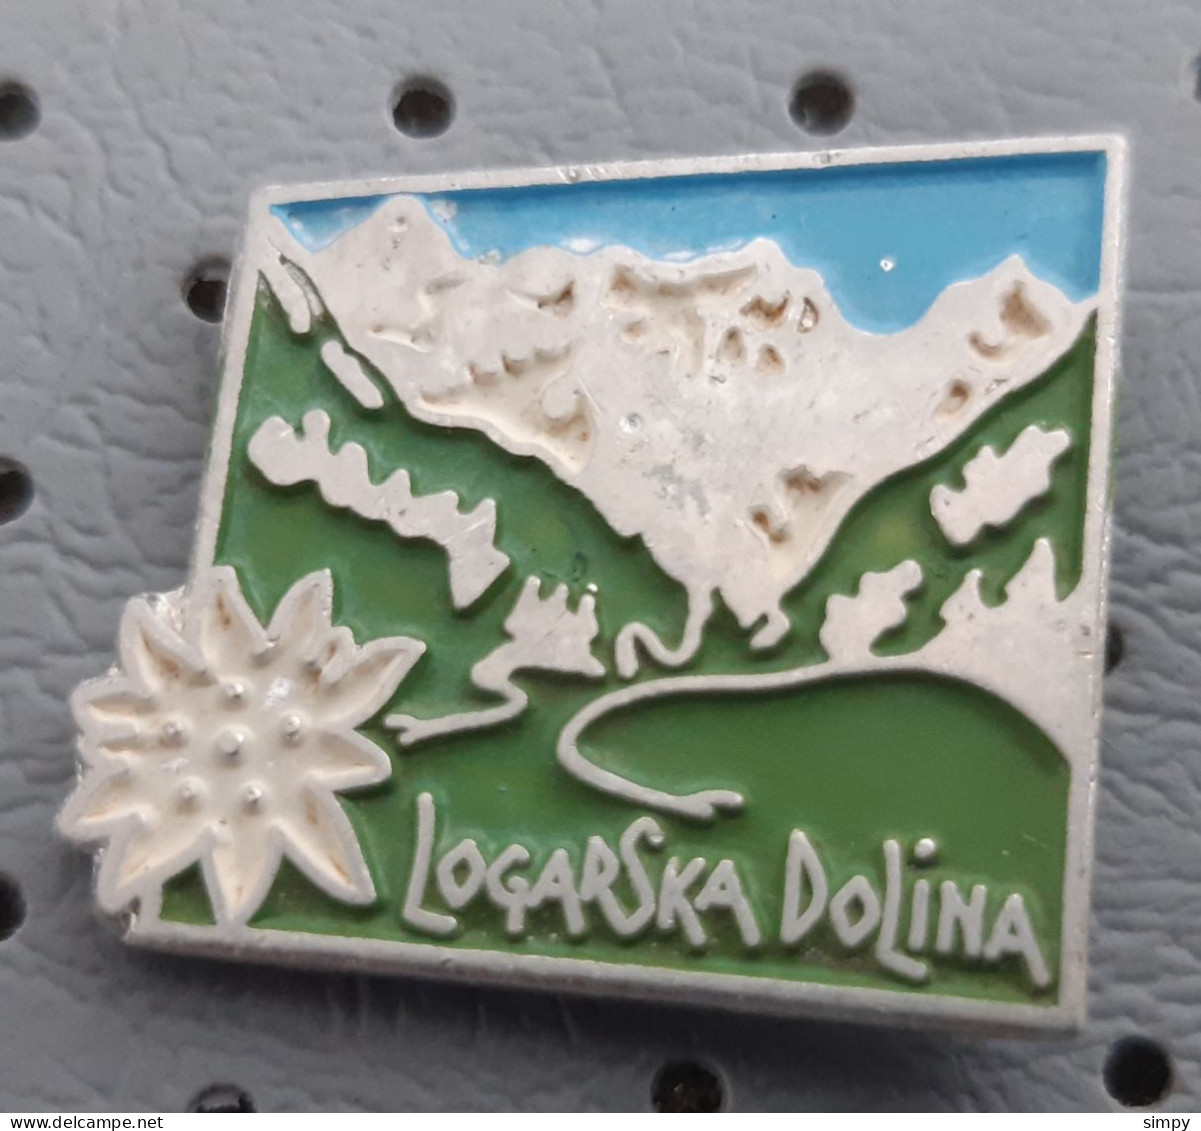 Logarska Dolina Logar Valley Alpinism, Mountaineering Slovenia Pin - Alpinismo, Escalada